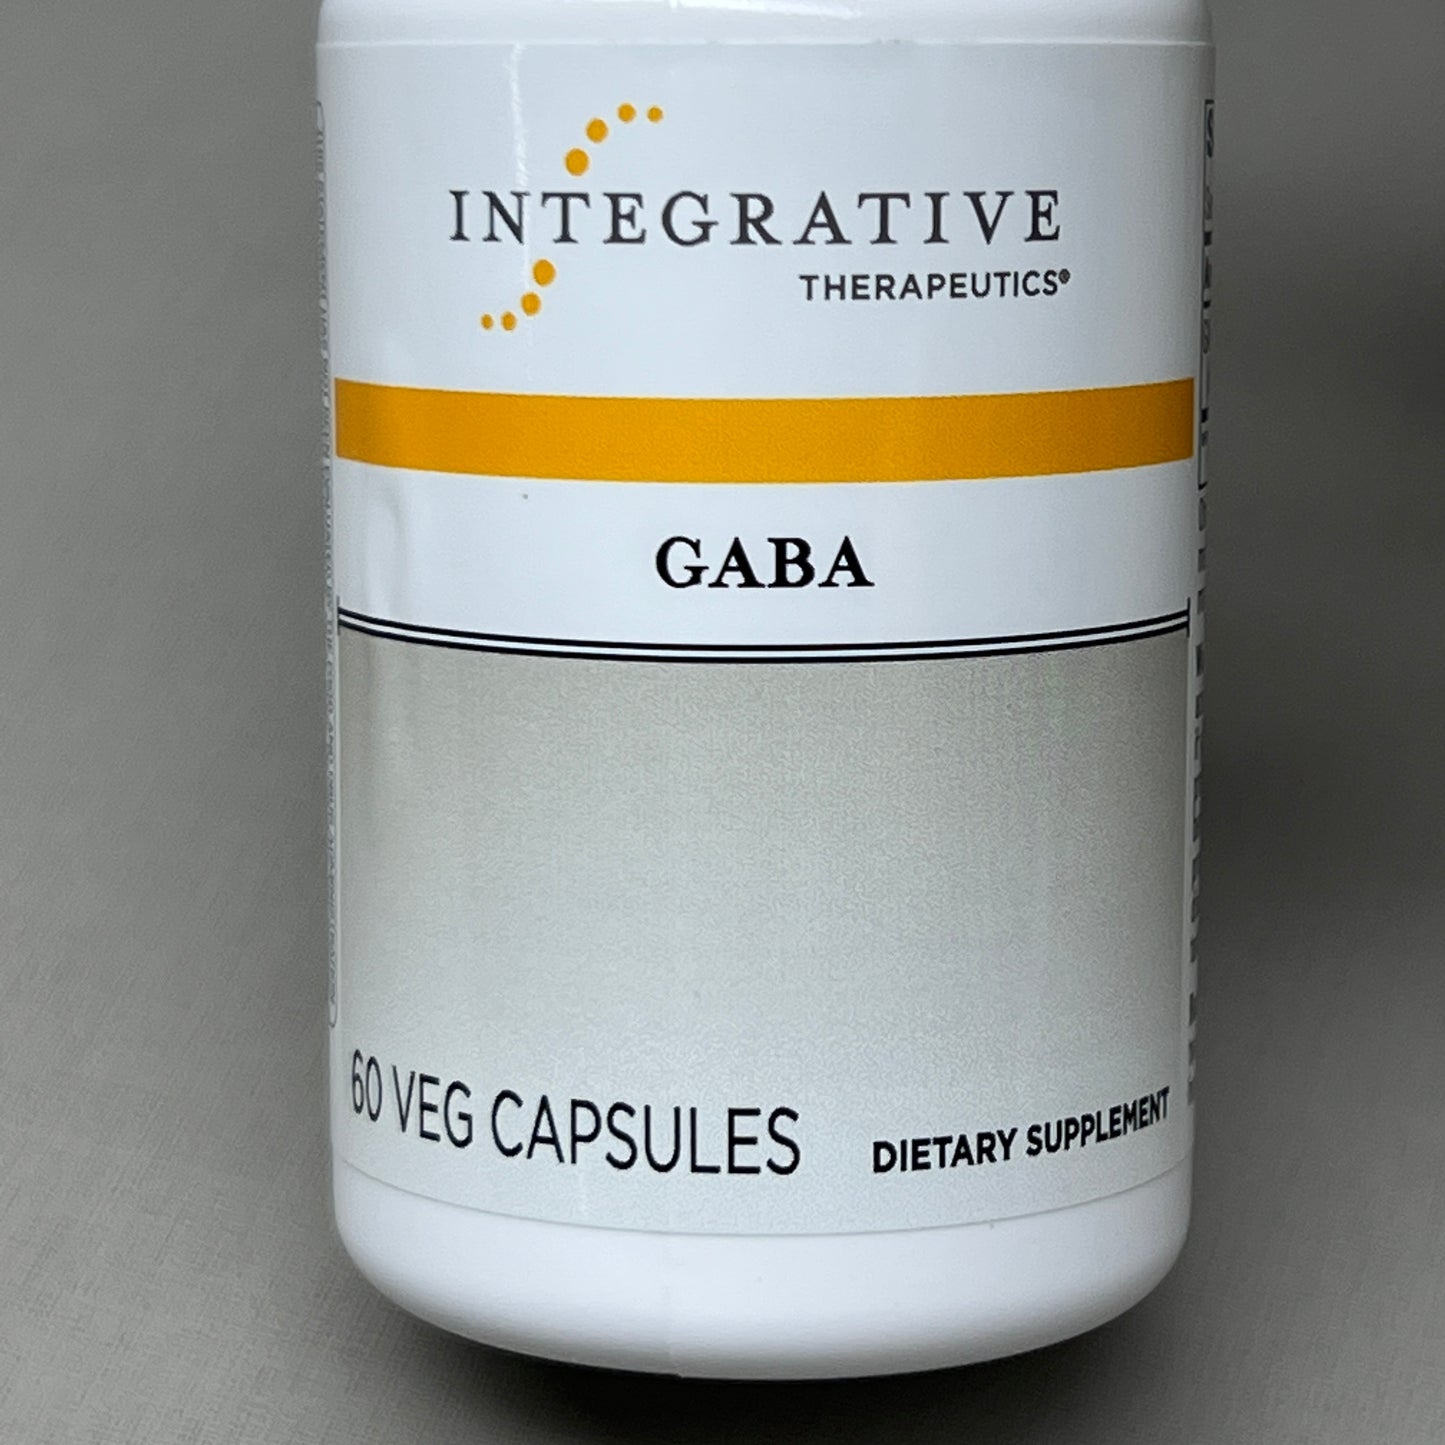 INTEGRATIVE THERAPEUTICS Gaba Dietary Supplement 60 veg capsules 3/24 (New)